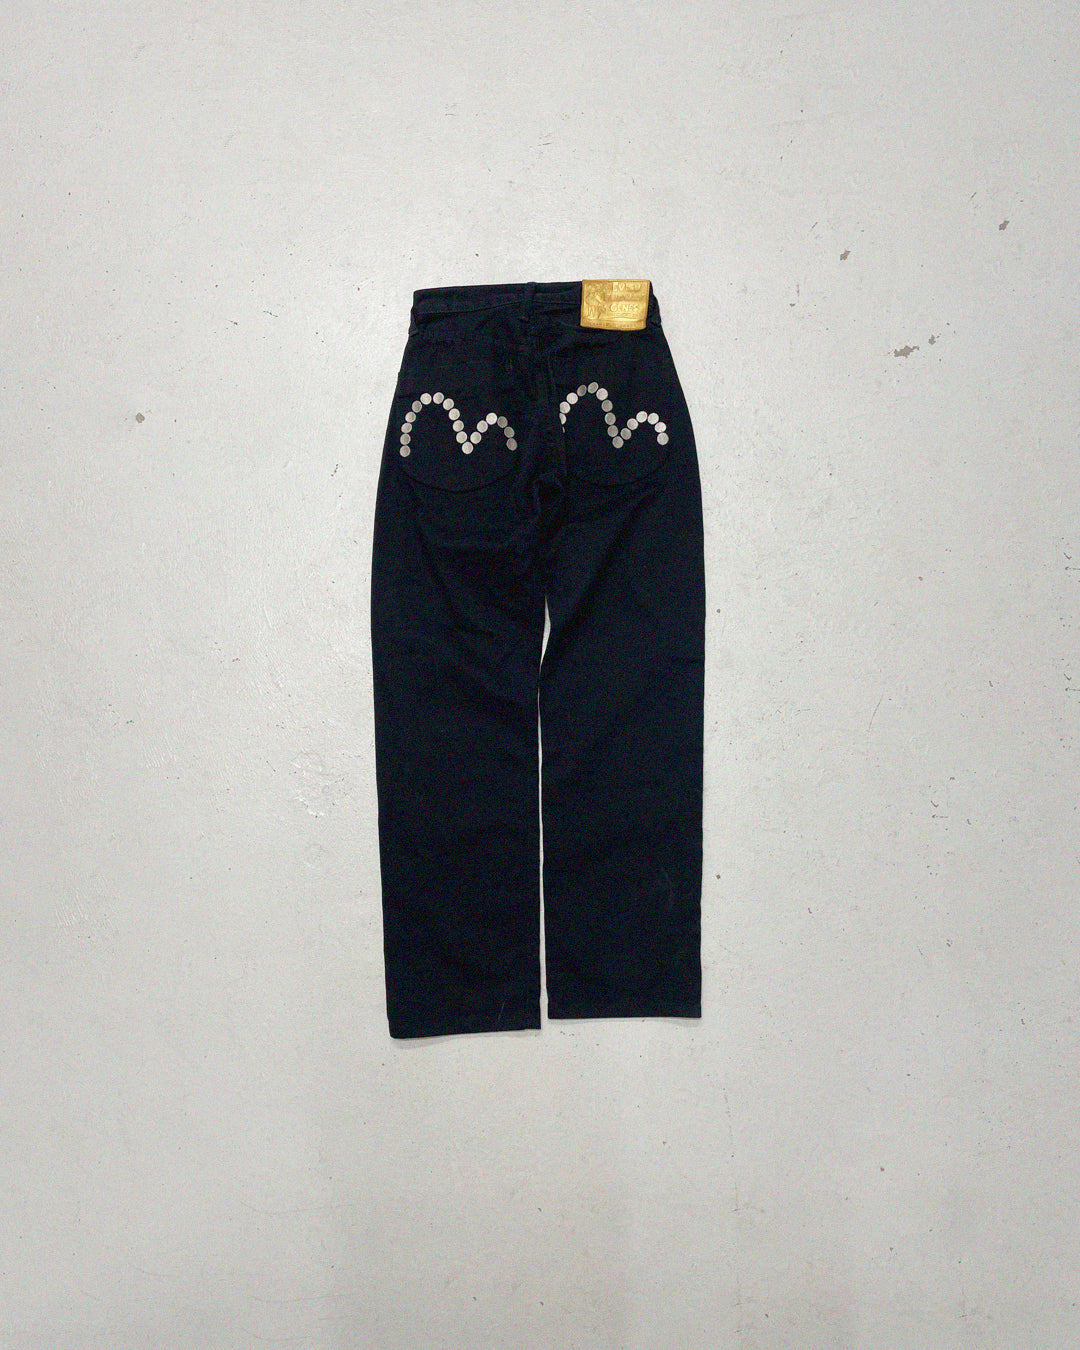 Evisu Jeans Black 28 x 35 Before Midnight Vintage